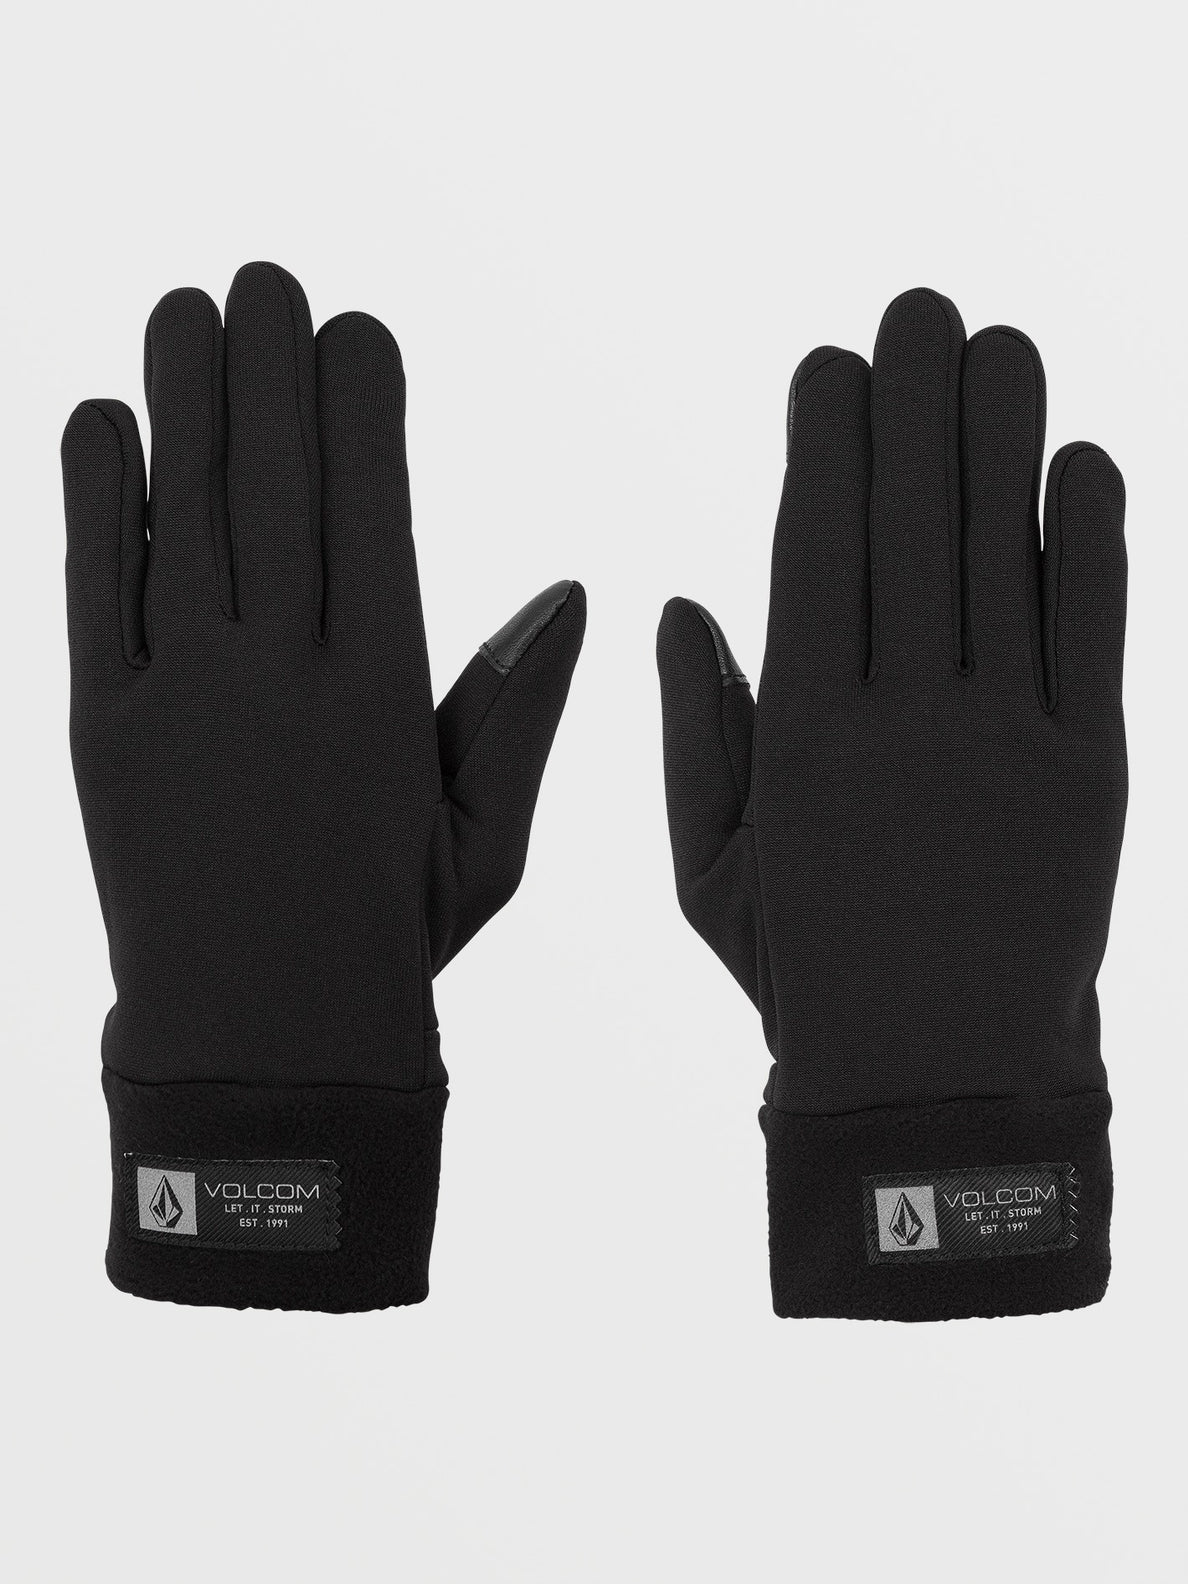 Womens Skye Gore-Tex Over Gloves - Black (K6852400_BLK) [1]